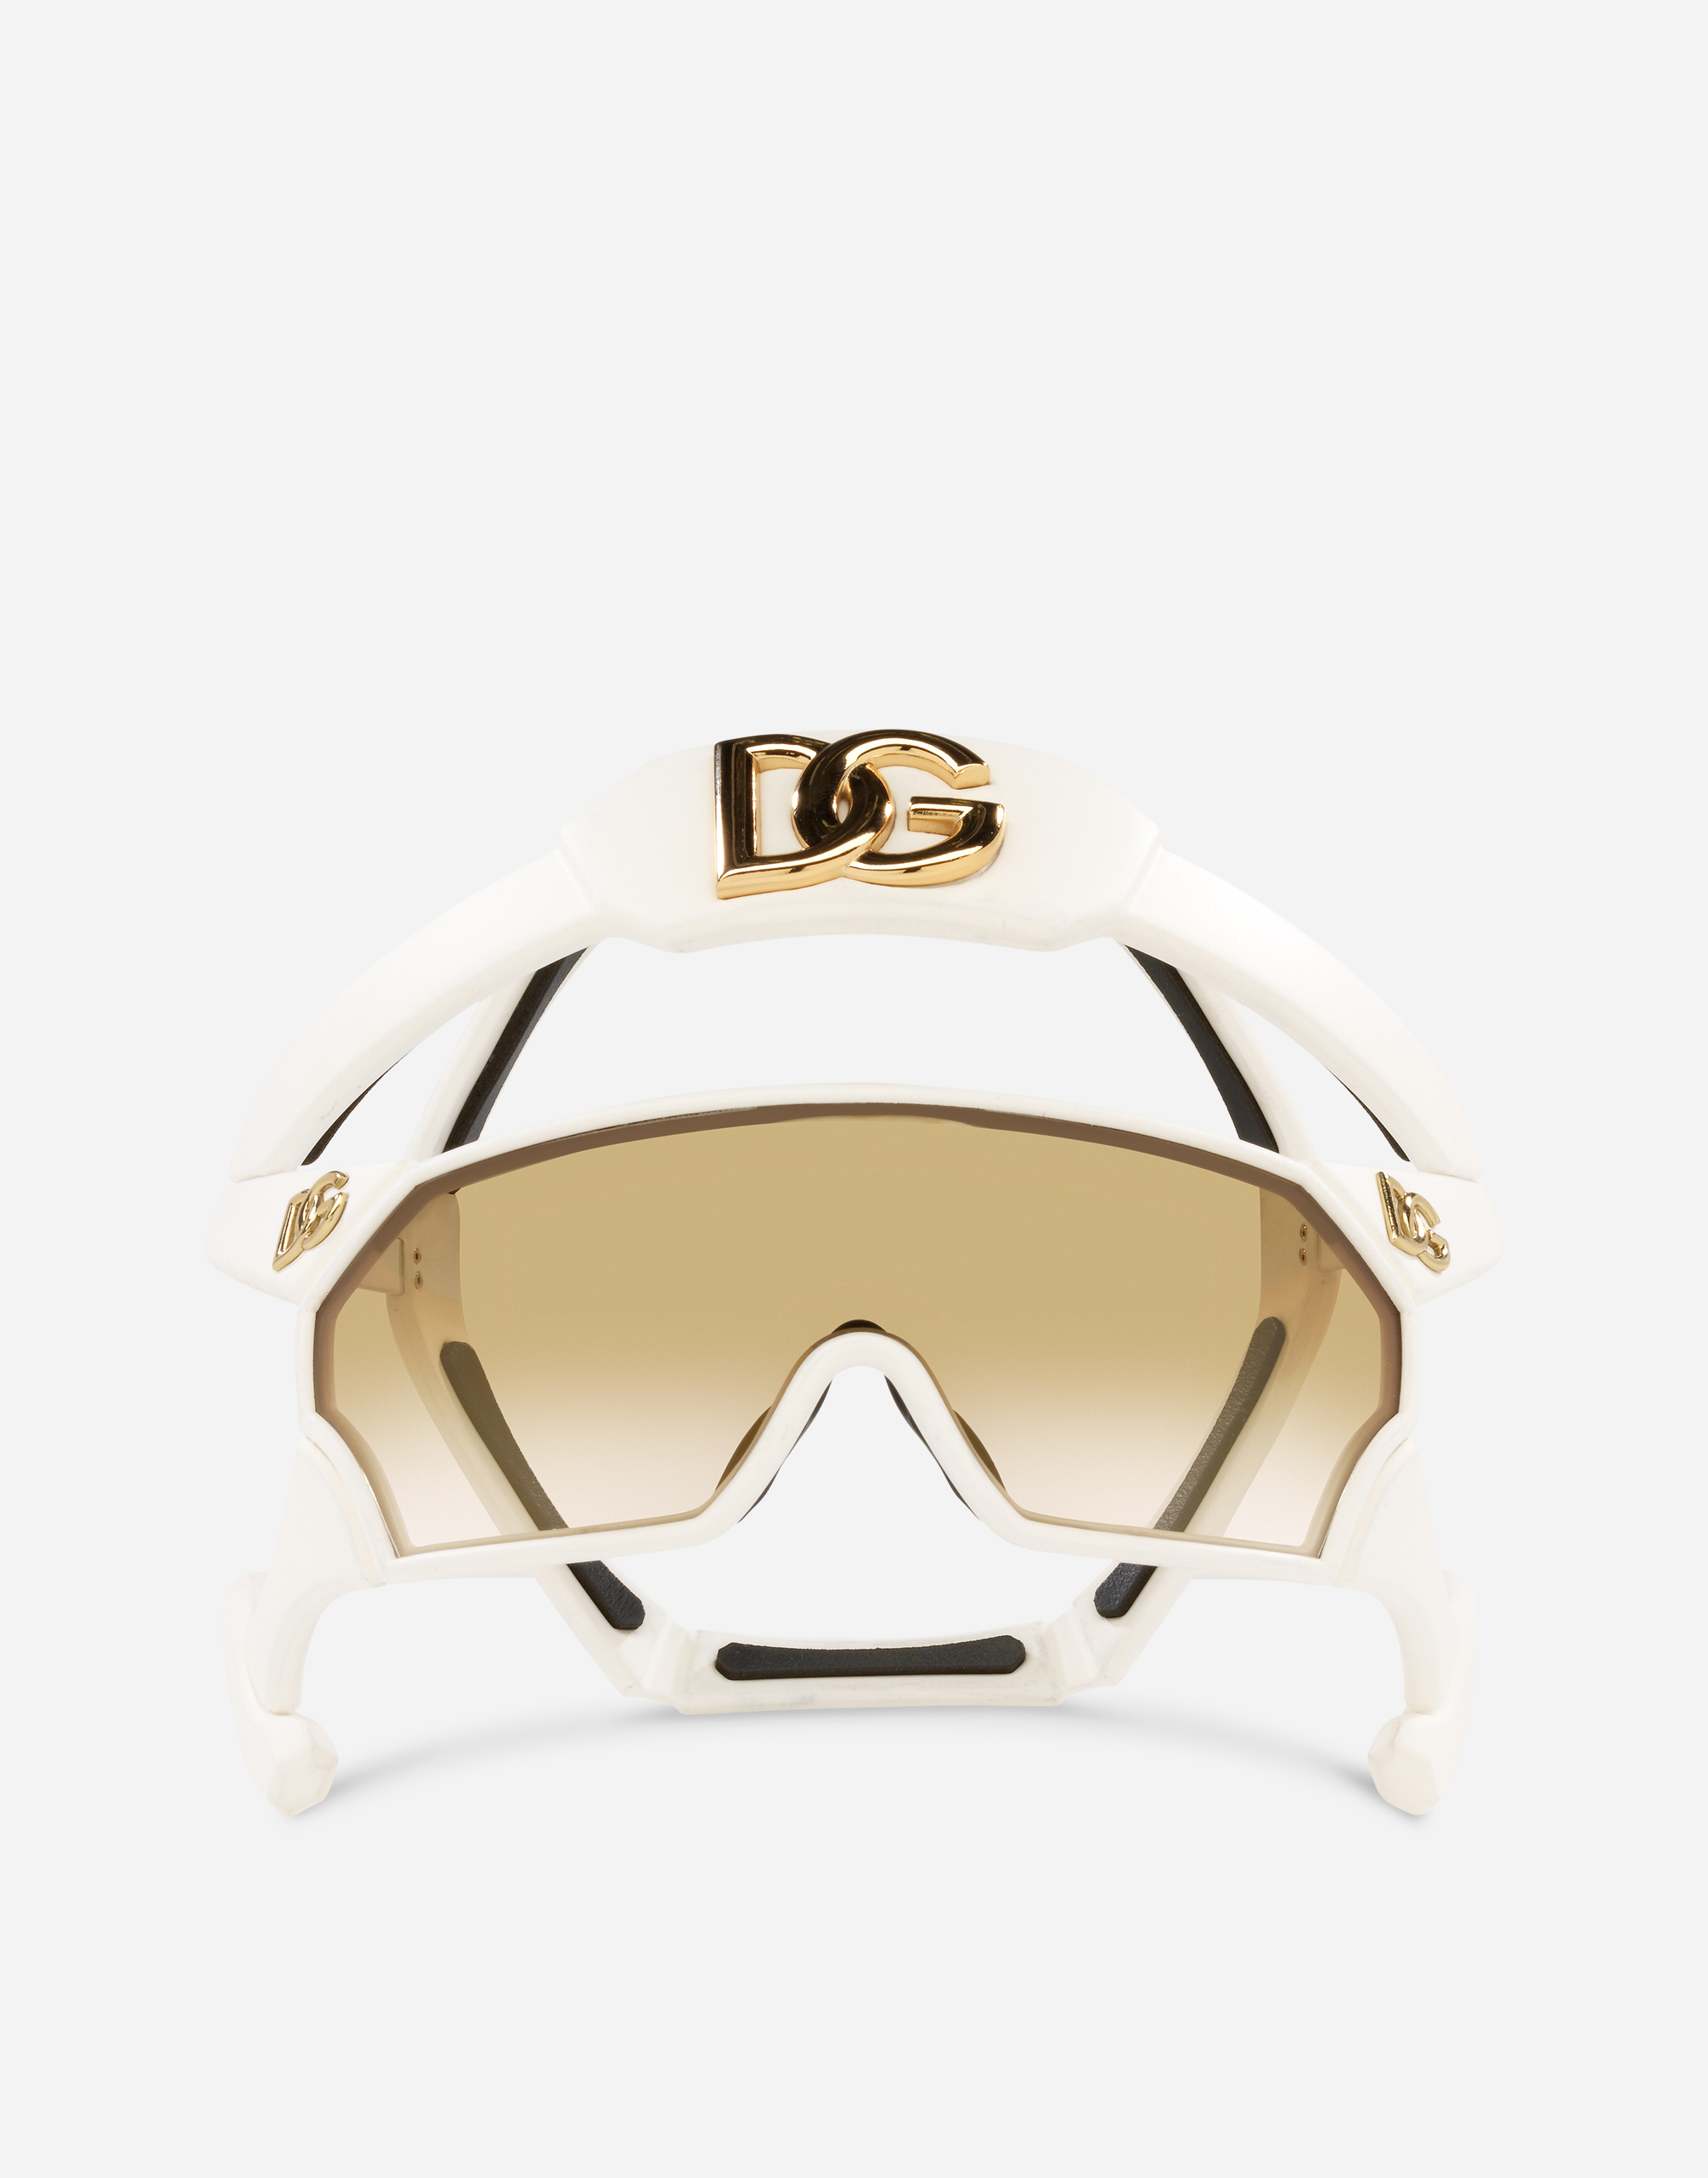 Next generation mask sunglasses in white